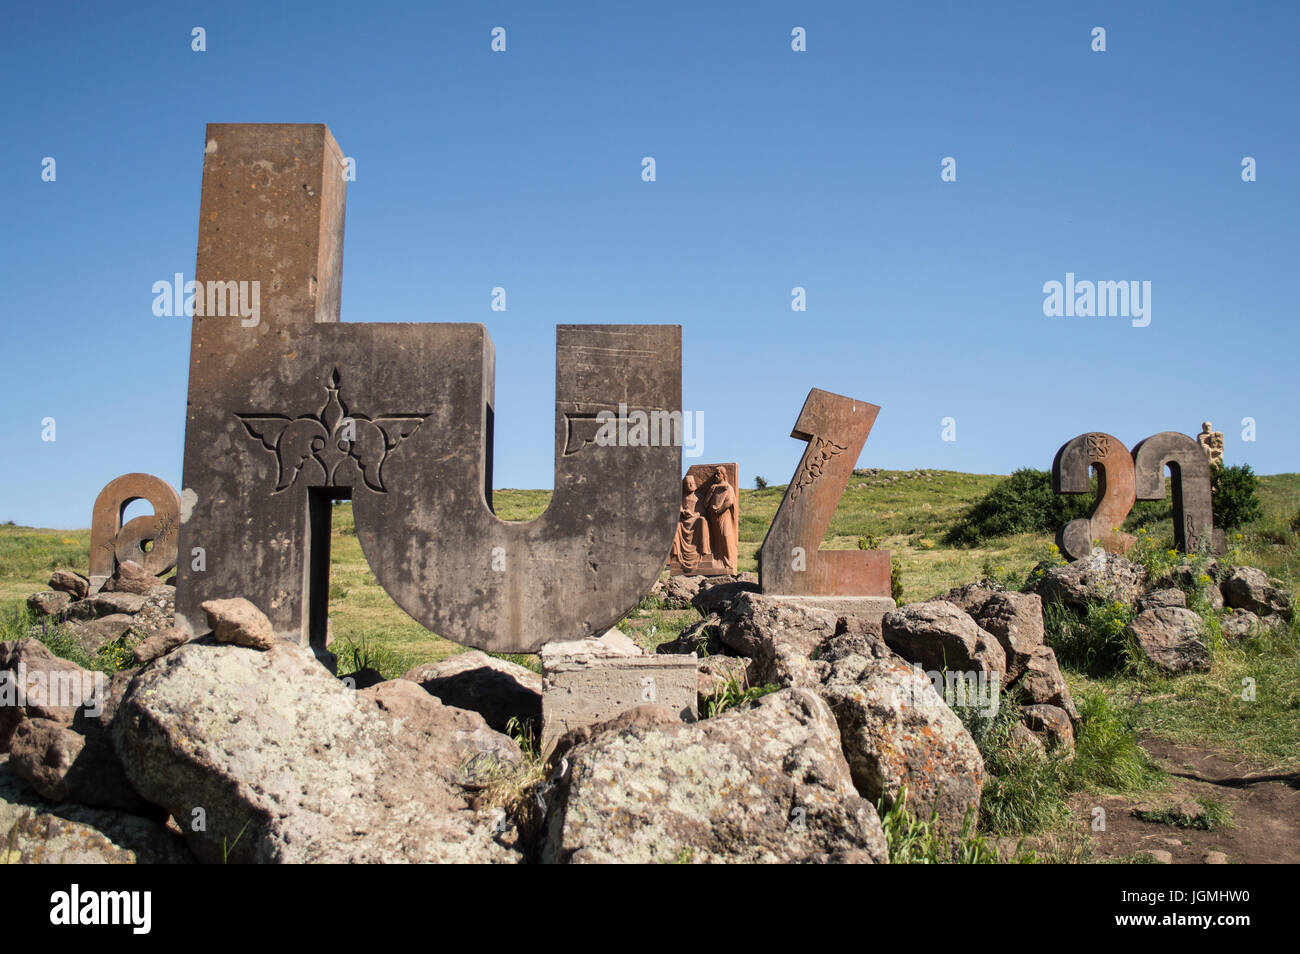 Letters of Armenian alphabet - Aparan, Armenia - Monument of Armenian alphabet - July 2, 2017 Stock Photo